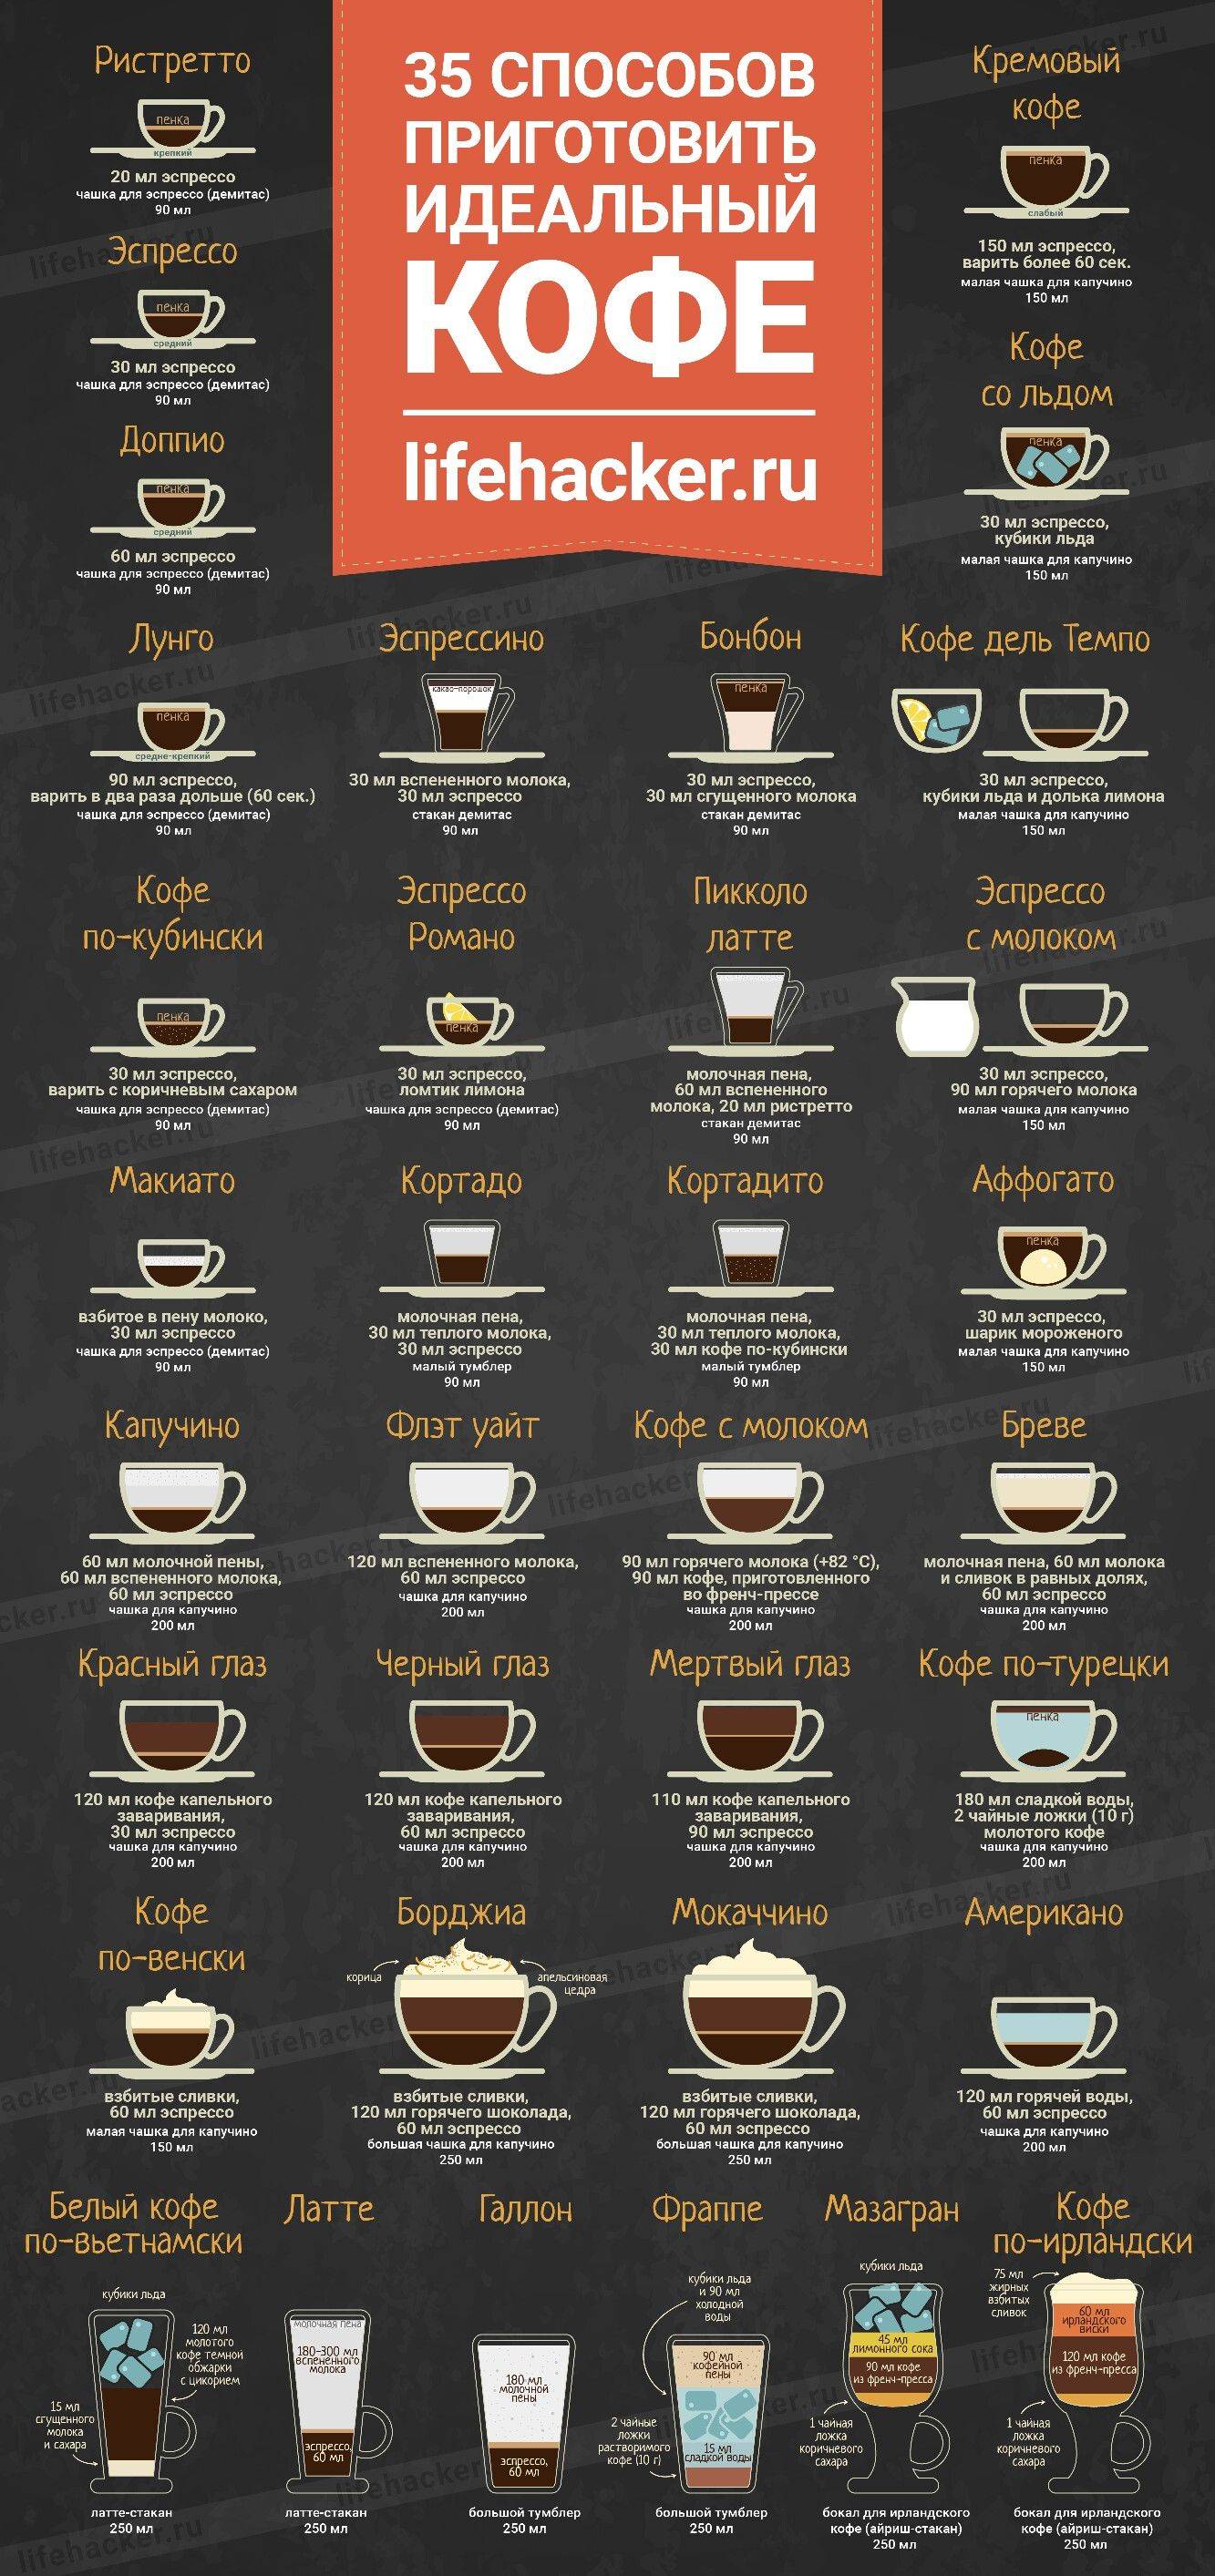 Капучино (cappuccino): состав, пропорции, классический рецепт напитка